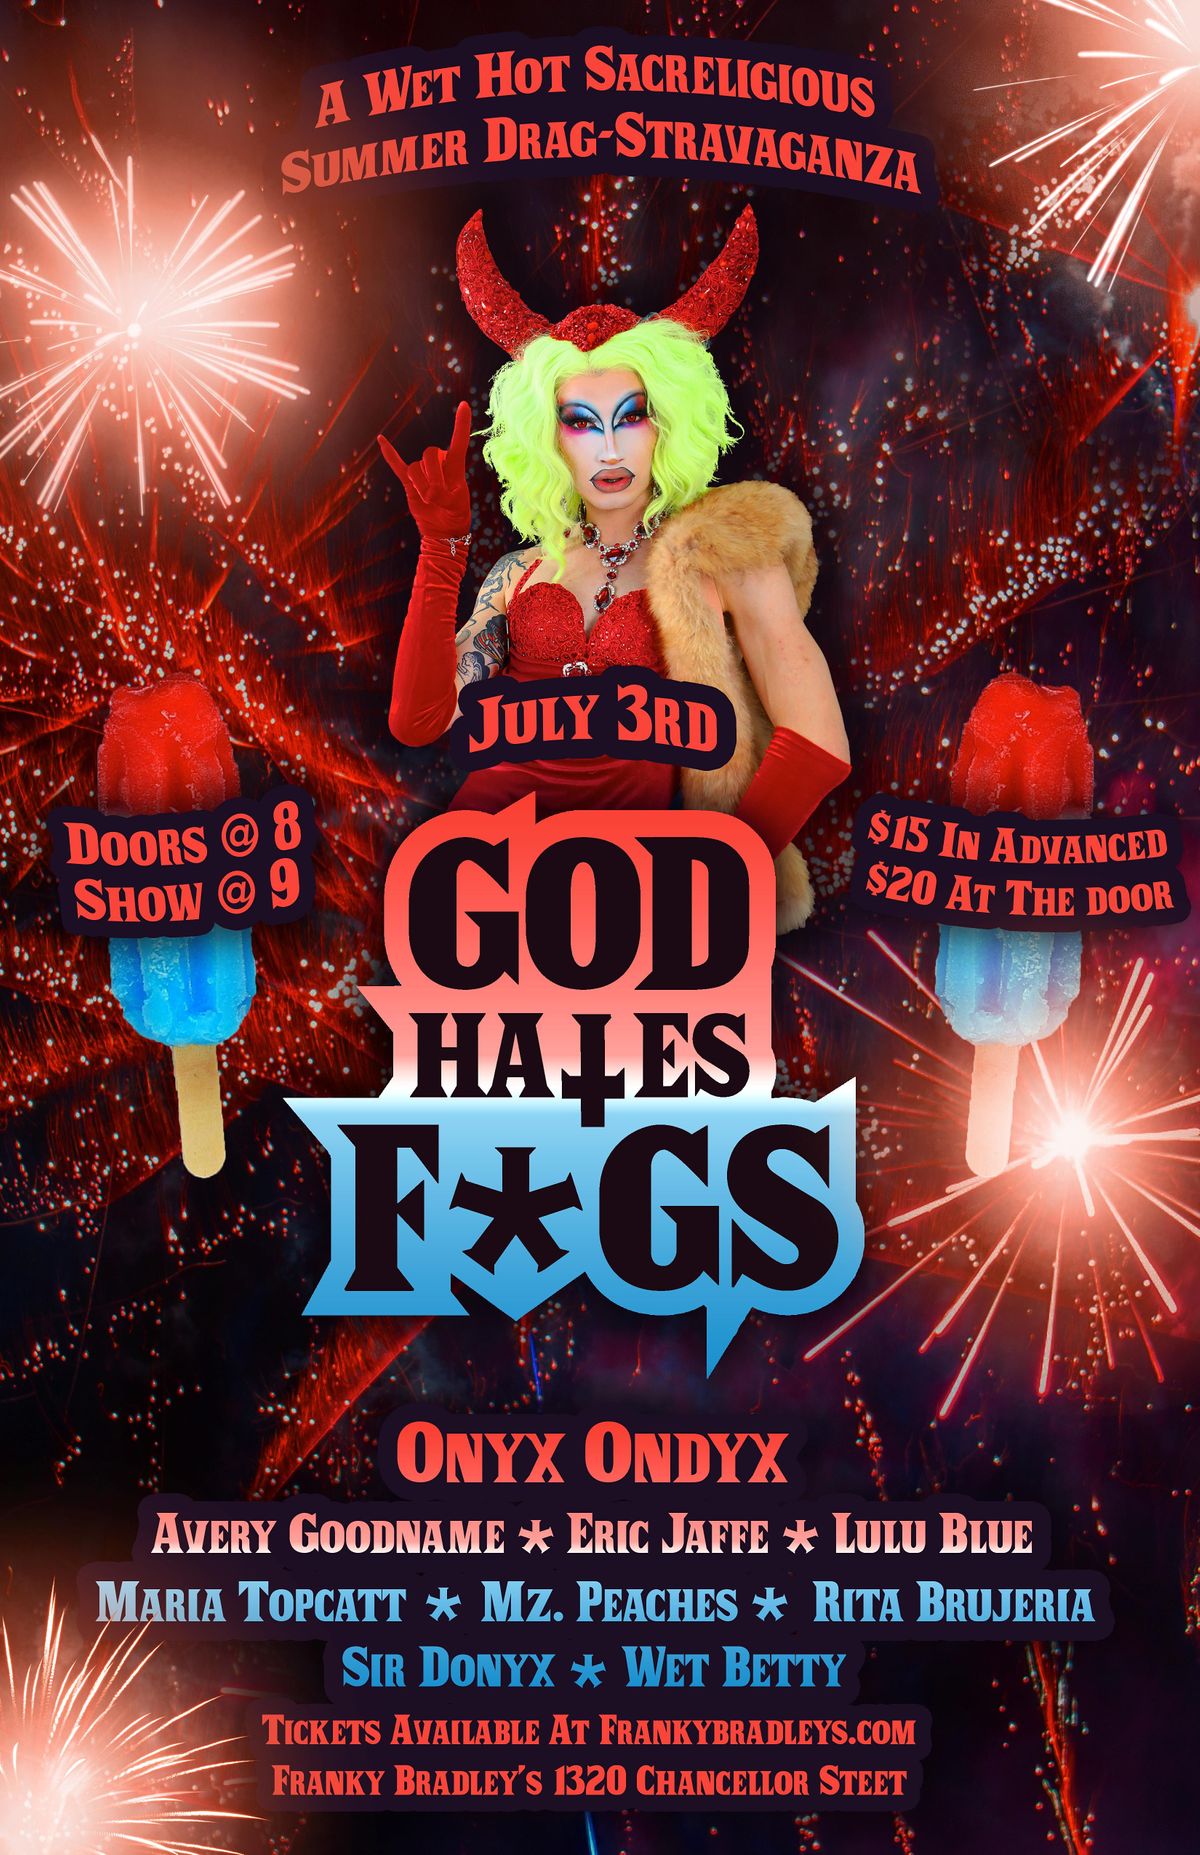 'God Hates F*gs' A Drag and Burlesque Celebration of the Sacrilegious